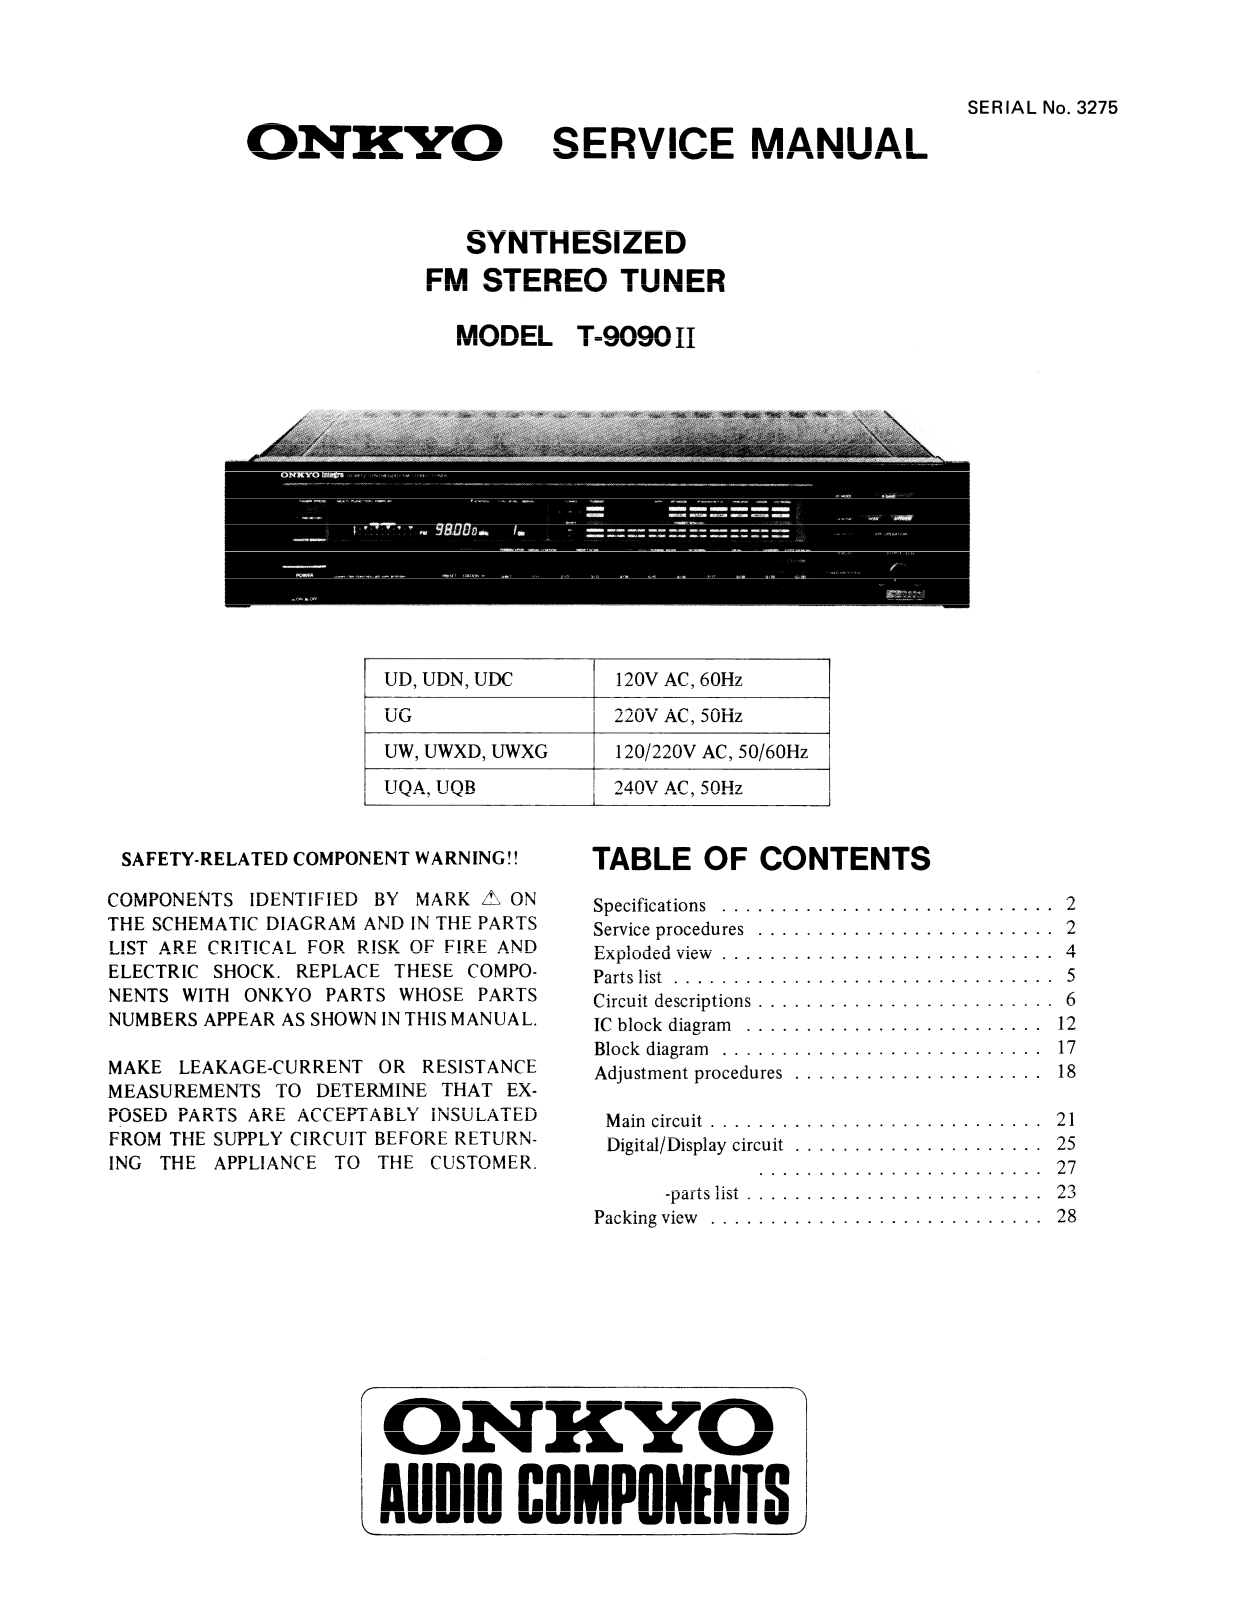 Onkyo T-9090-II Service Manual